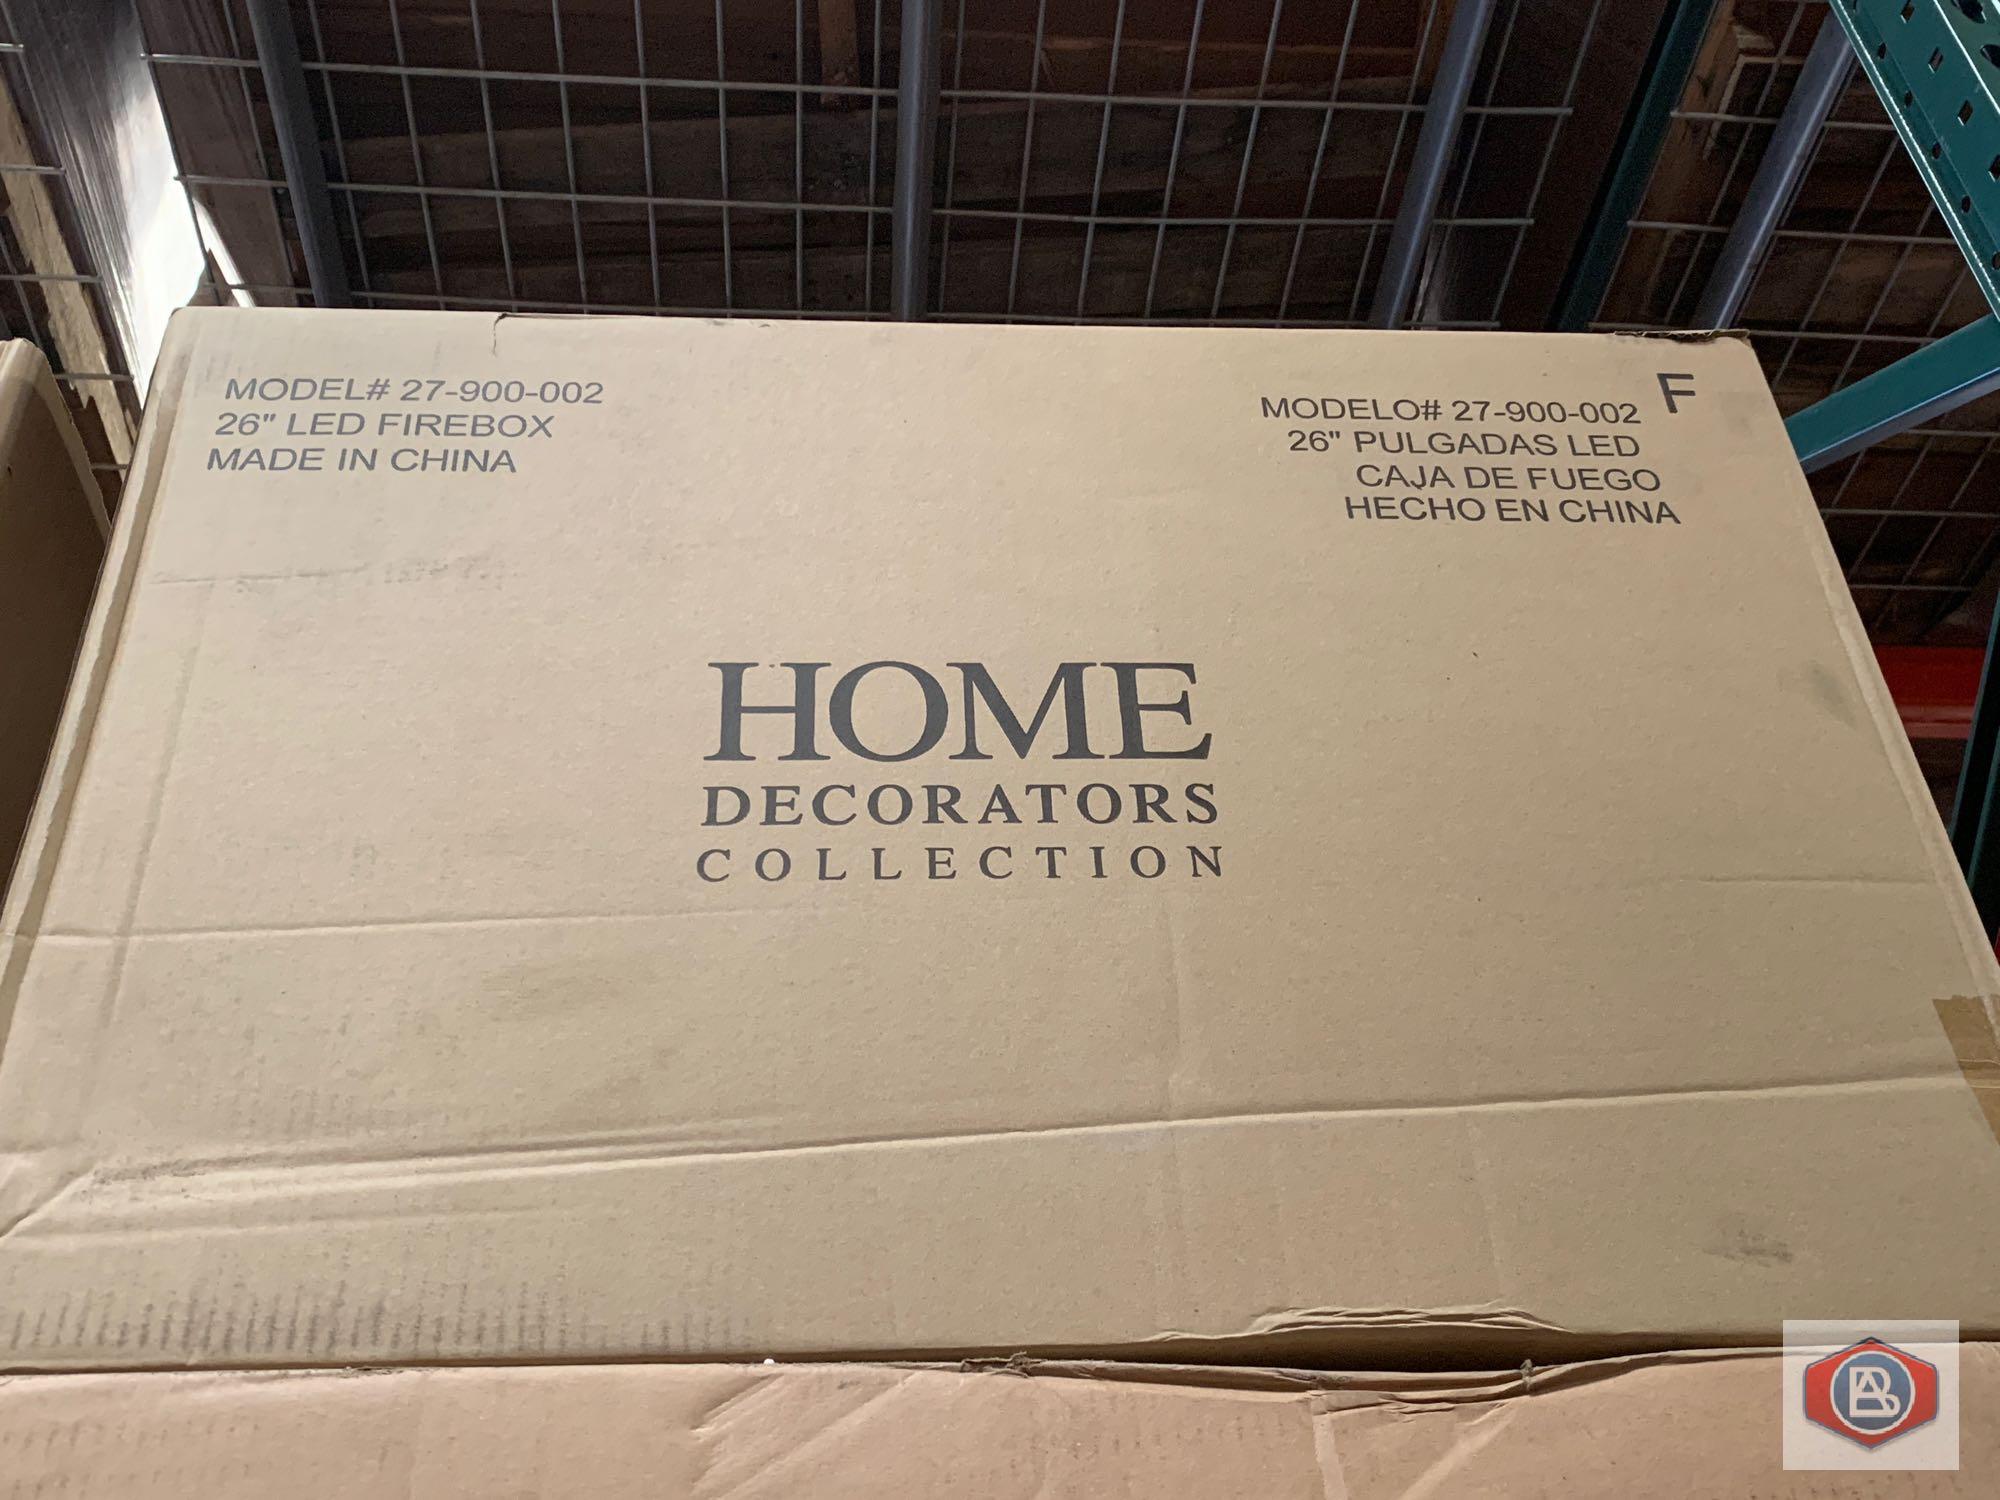 Home decorators collection